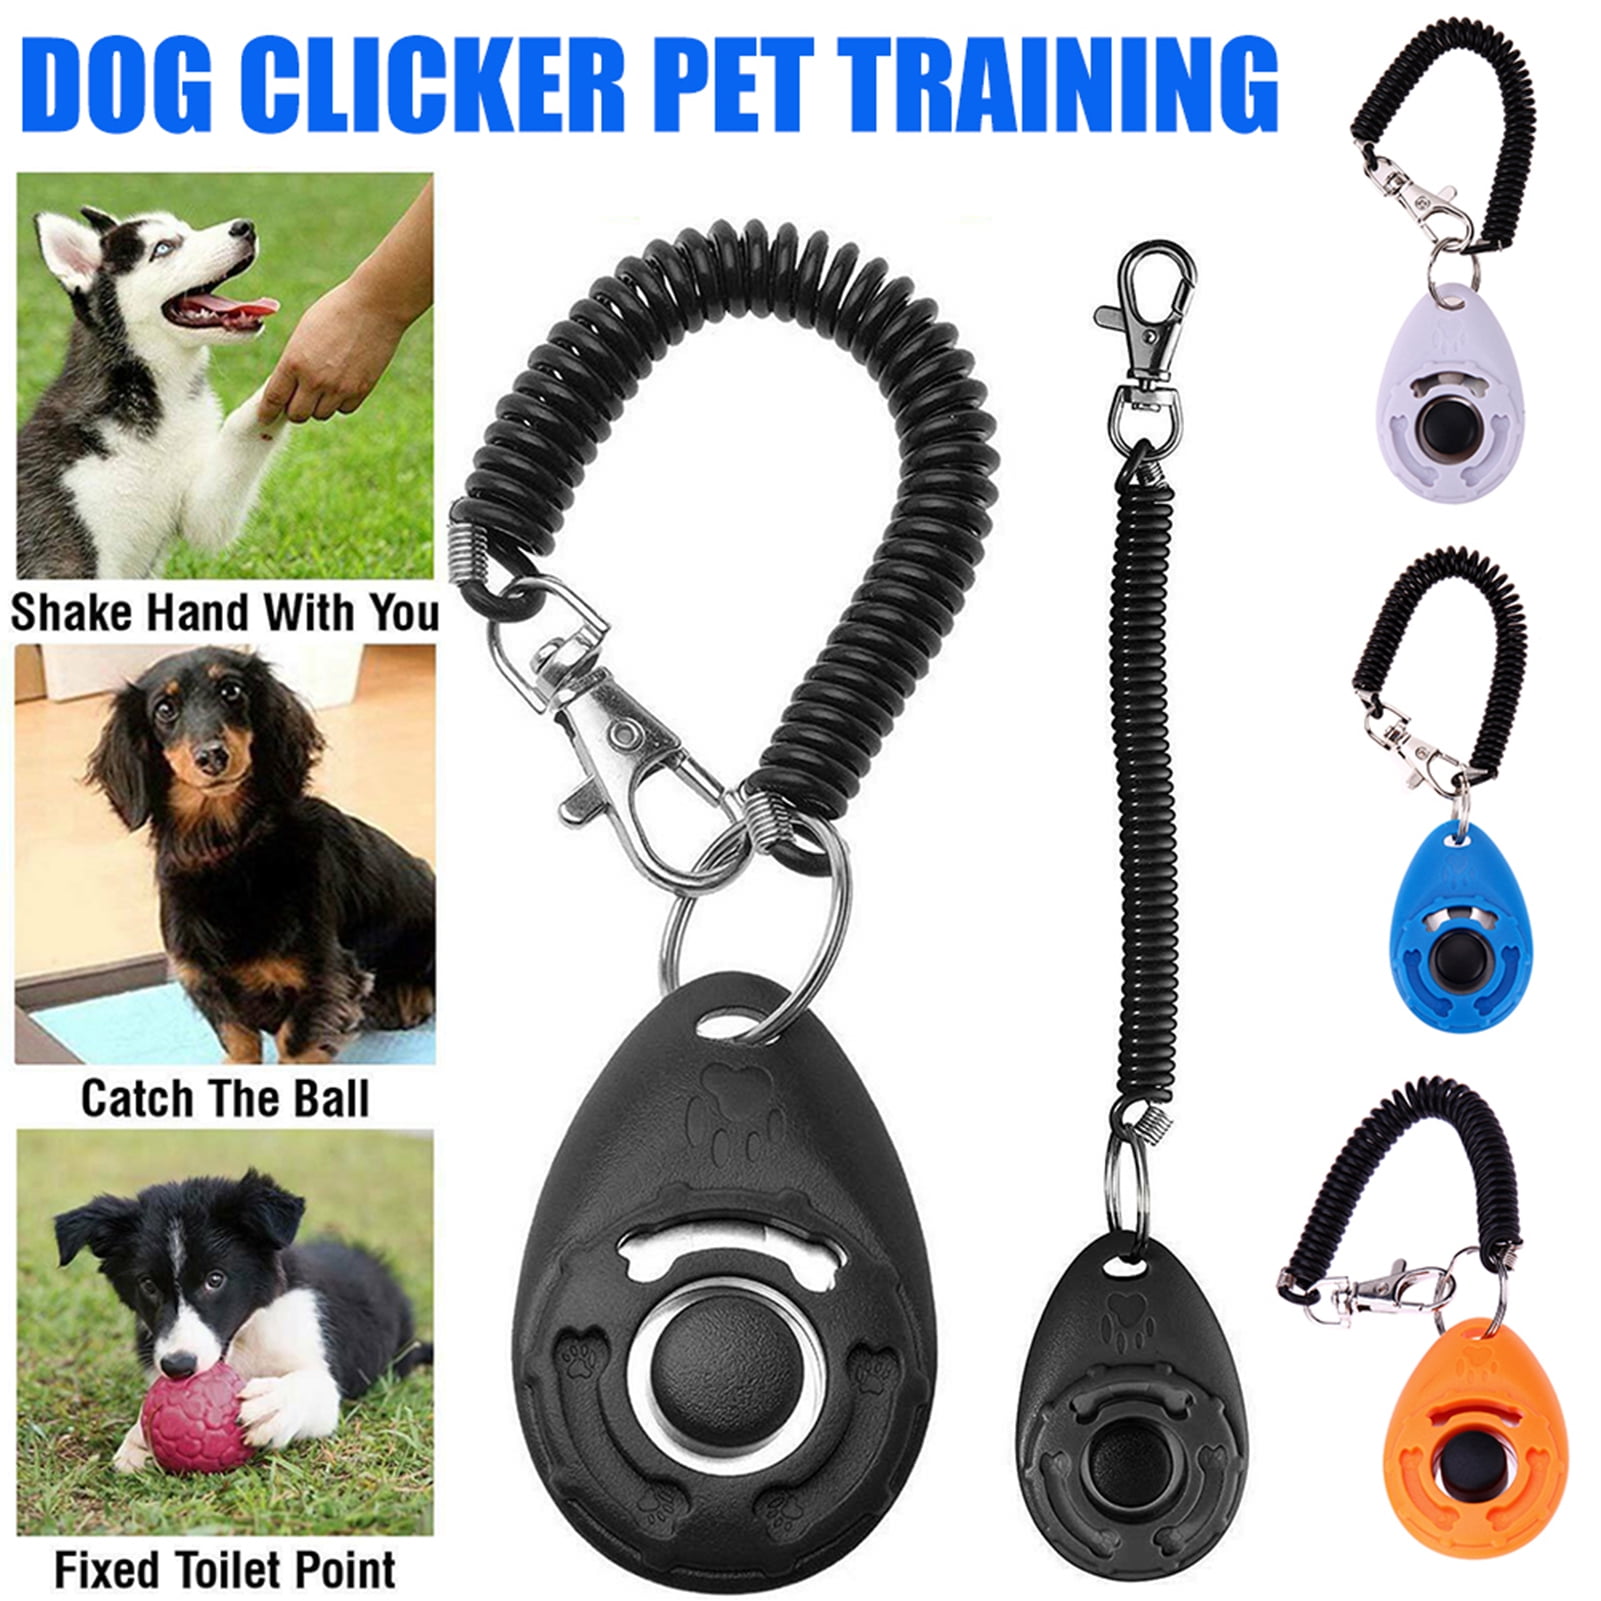 Click Sound Clicker Dog Supplies Pet Training Supplies Training Sound  Clicker Sound Guide Train Clicker dogs